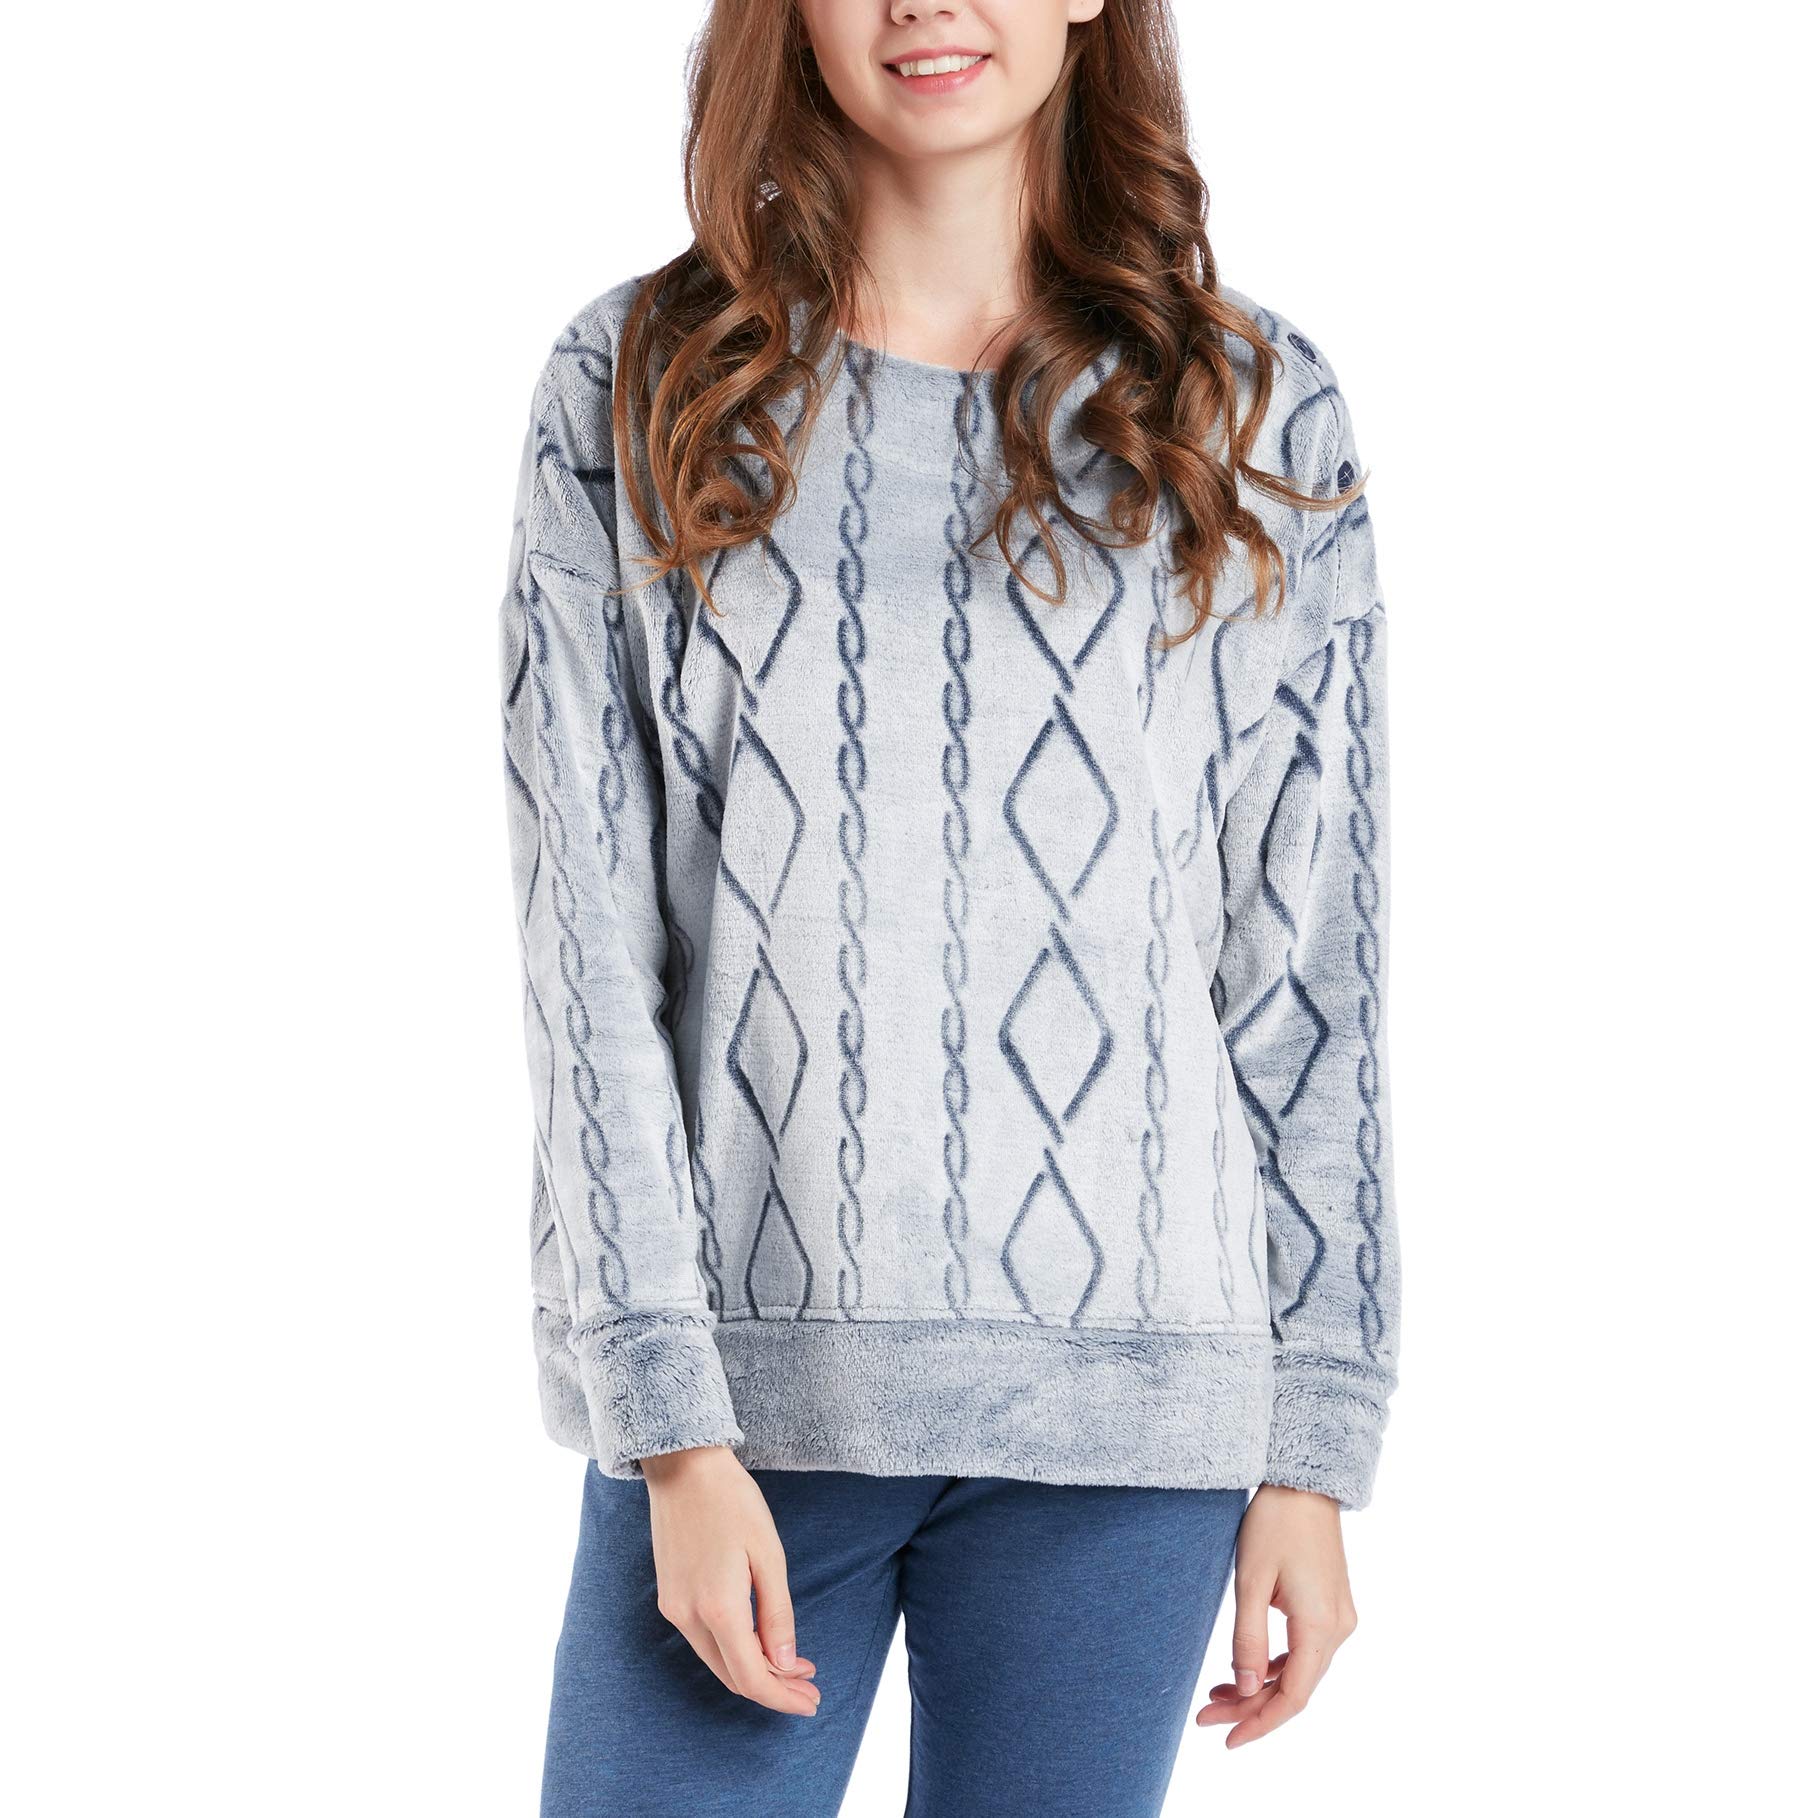 Scoop Neck Pullover Sweatshirts for Women, Crewneck Sweatshirt Women Cable Sweater Top with Shoulder Buttons, Blue S